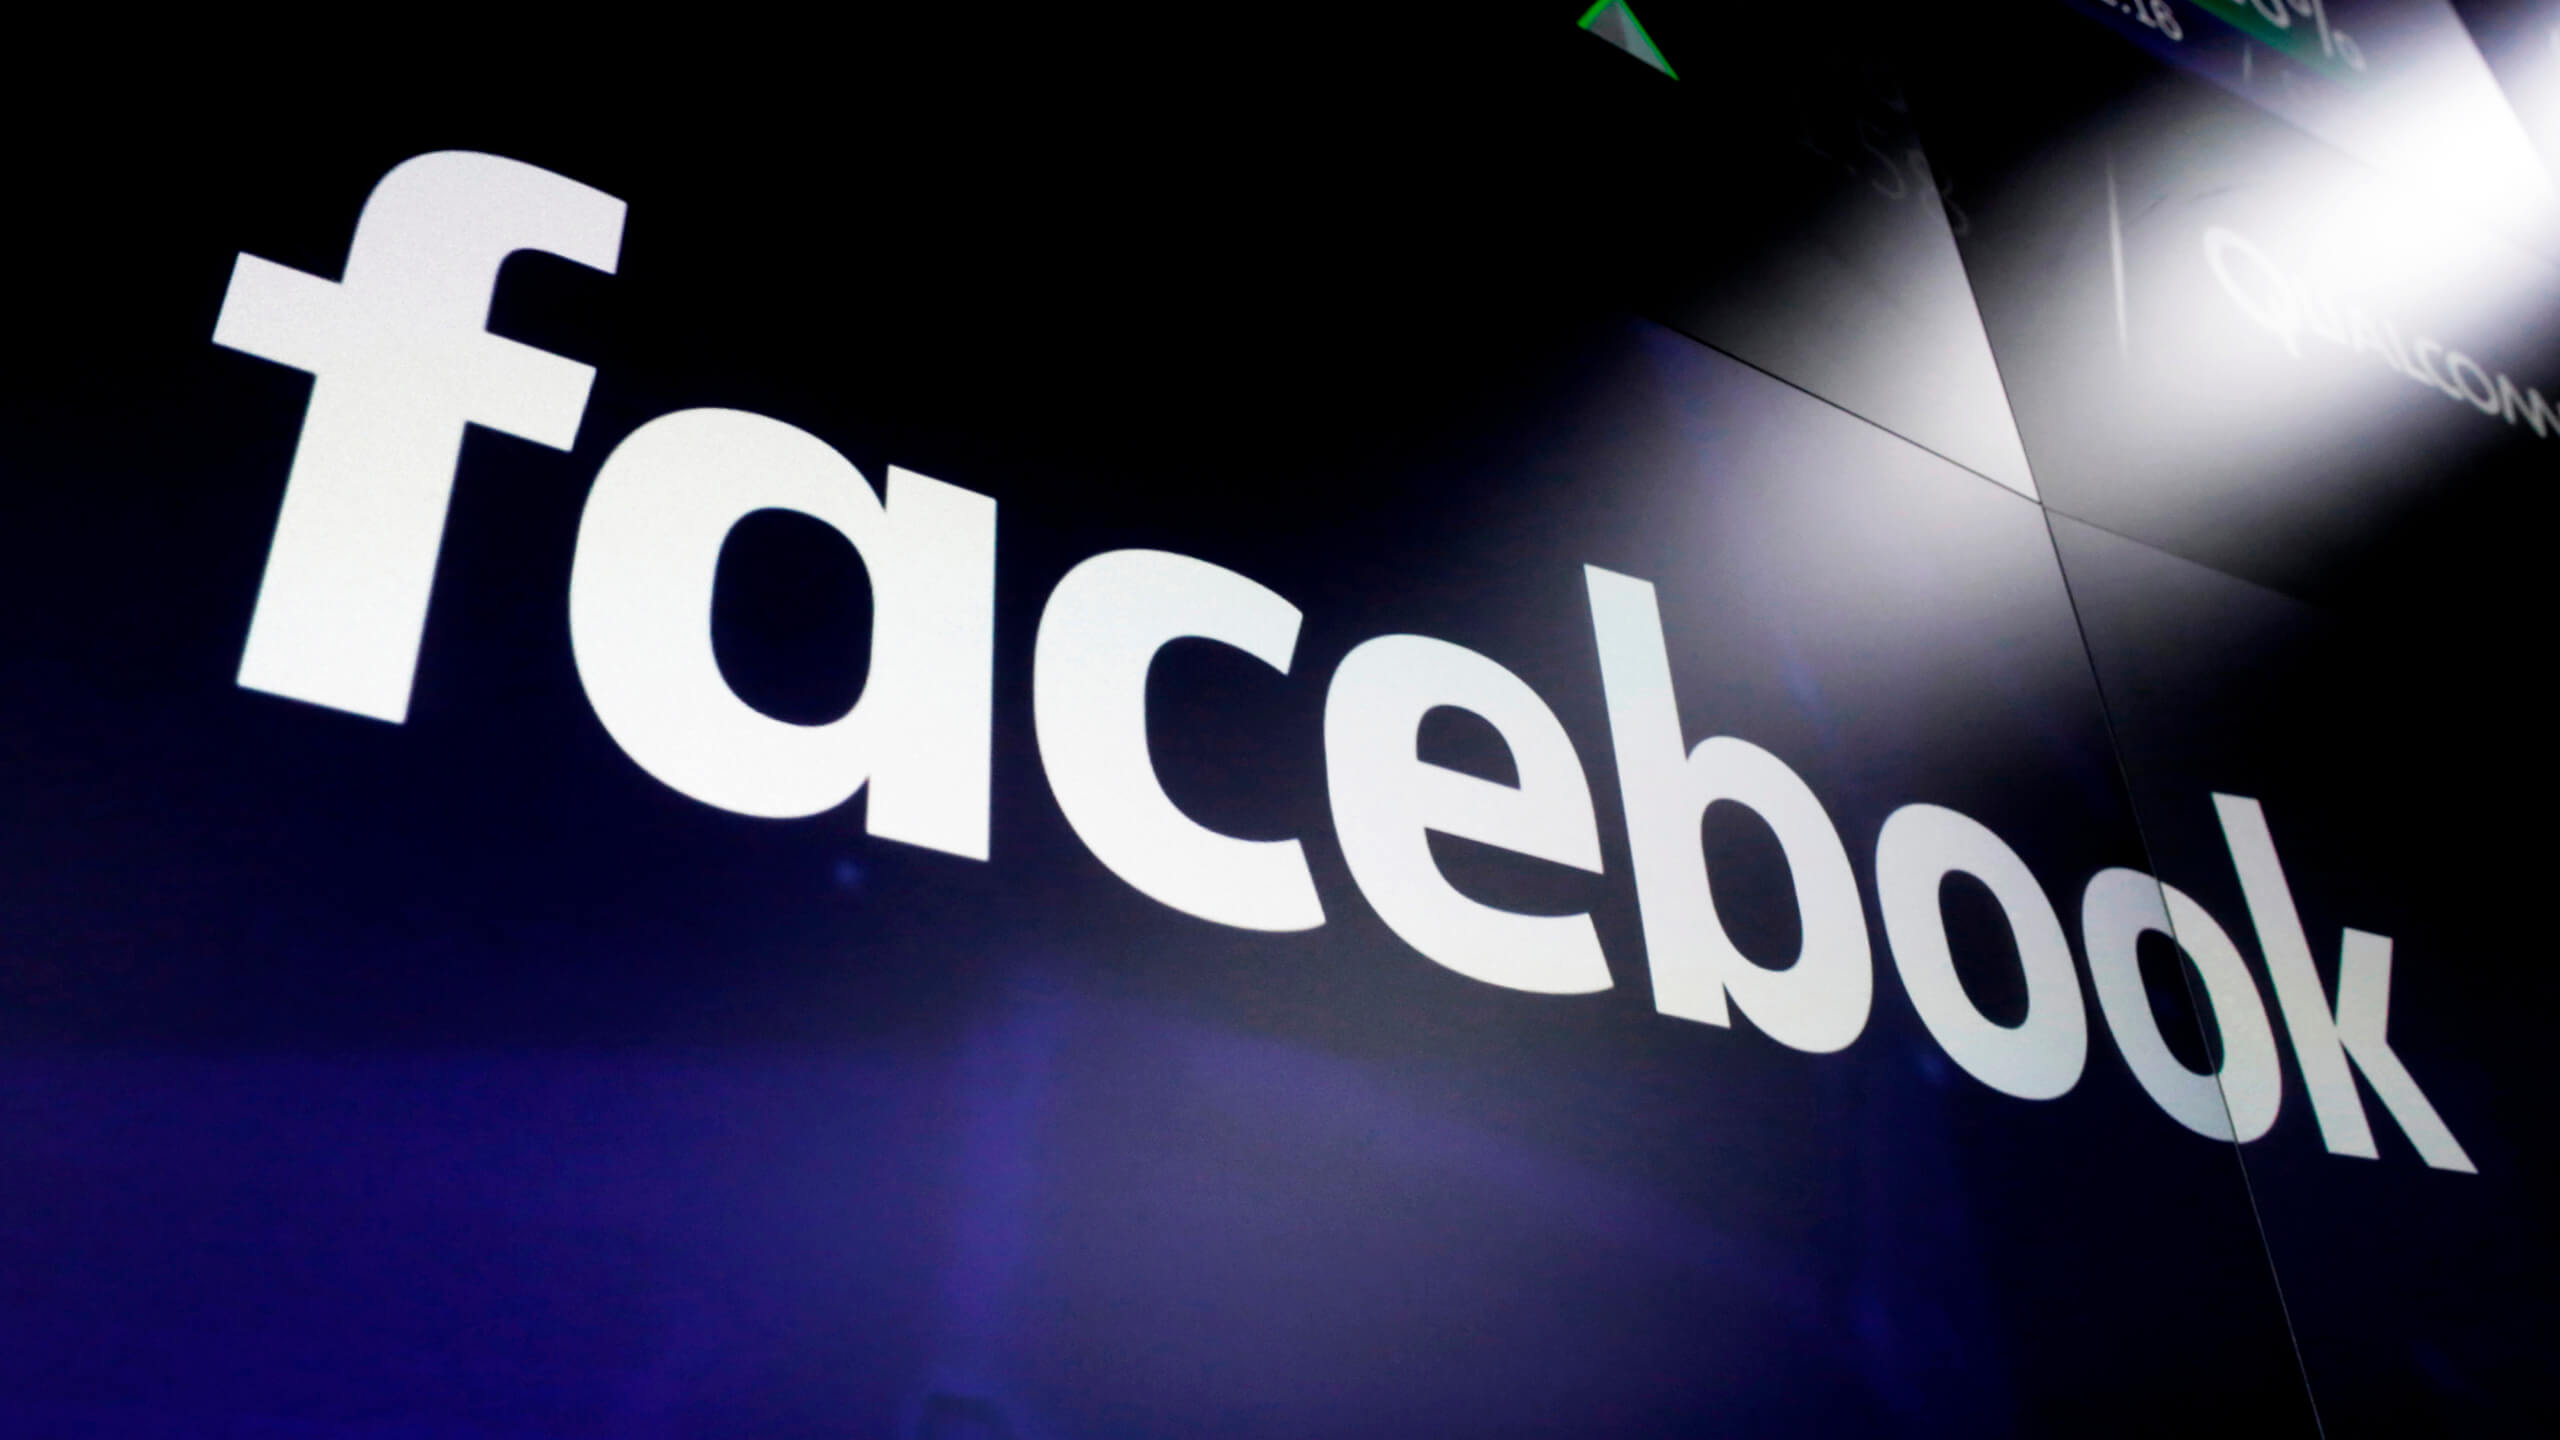 Australian Treasurer slams social media giants towards block news- ‘Facebook was wrong’